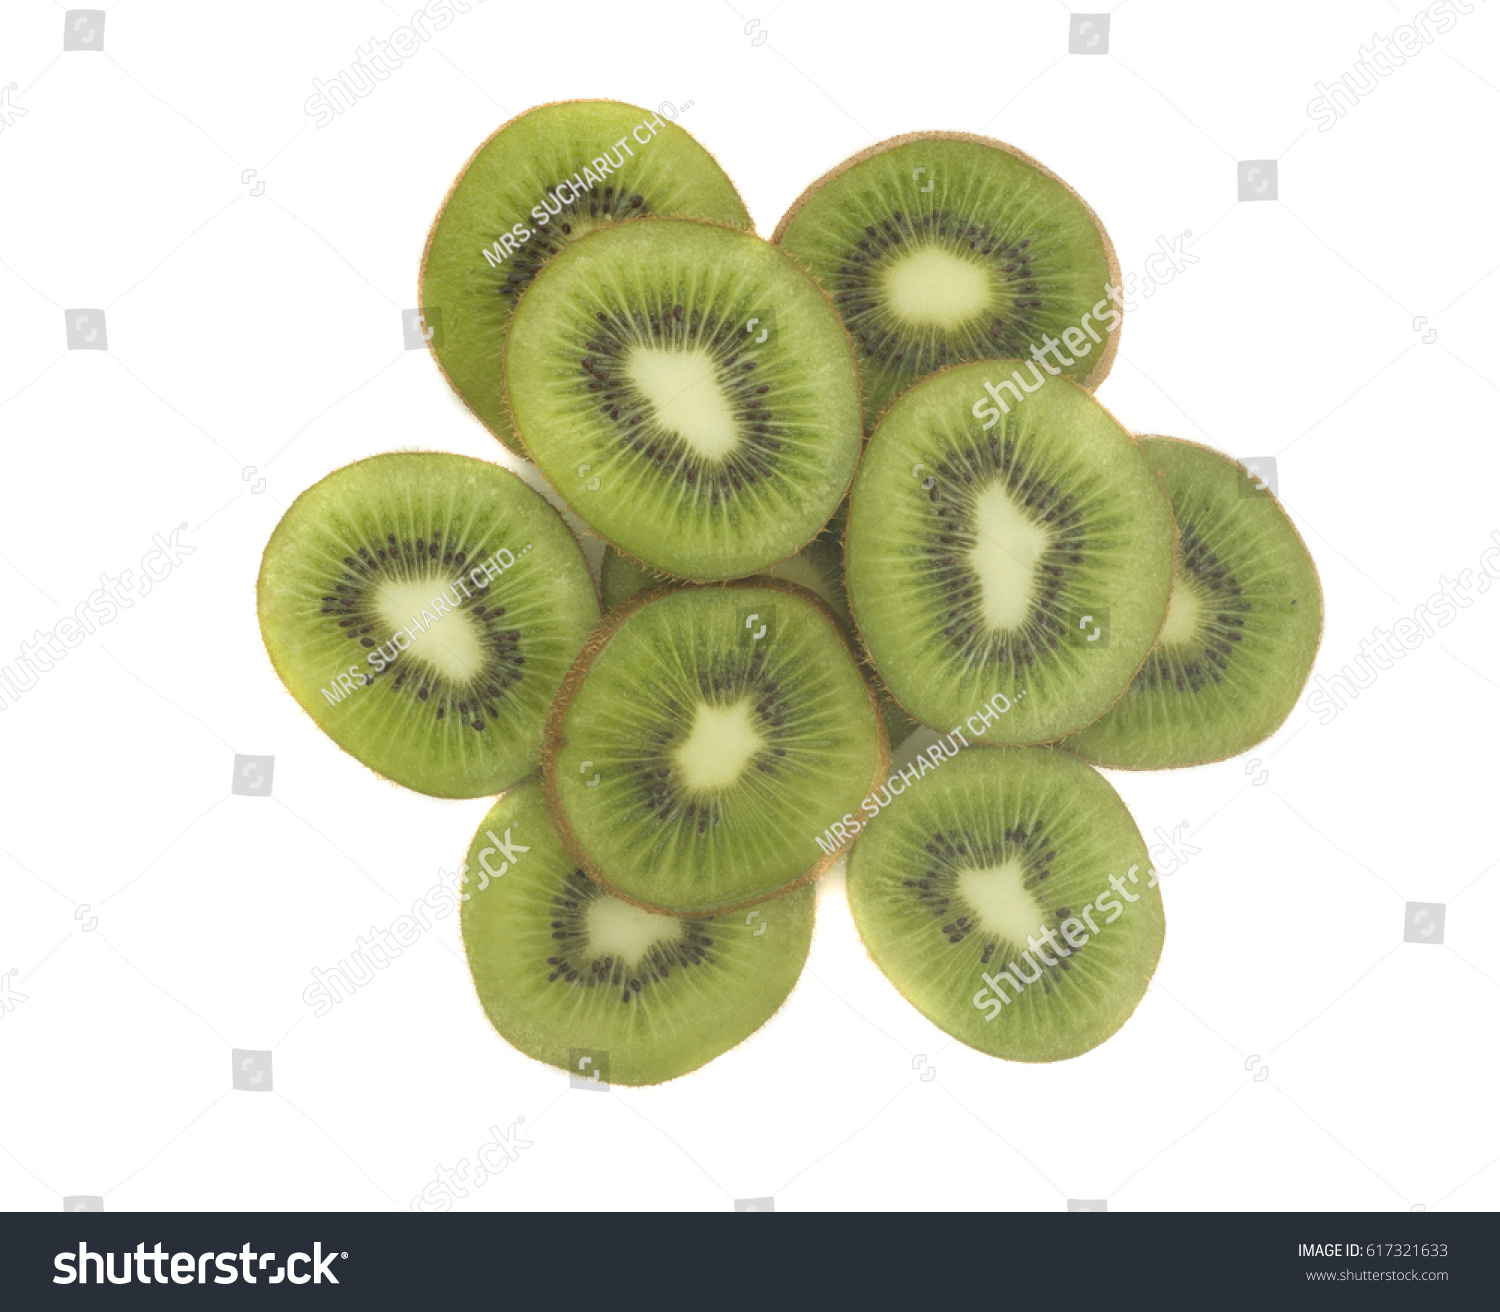 Kiwi,Slices of kiwi fruit

 #617321633